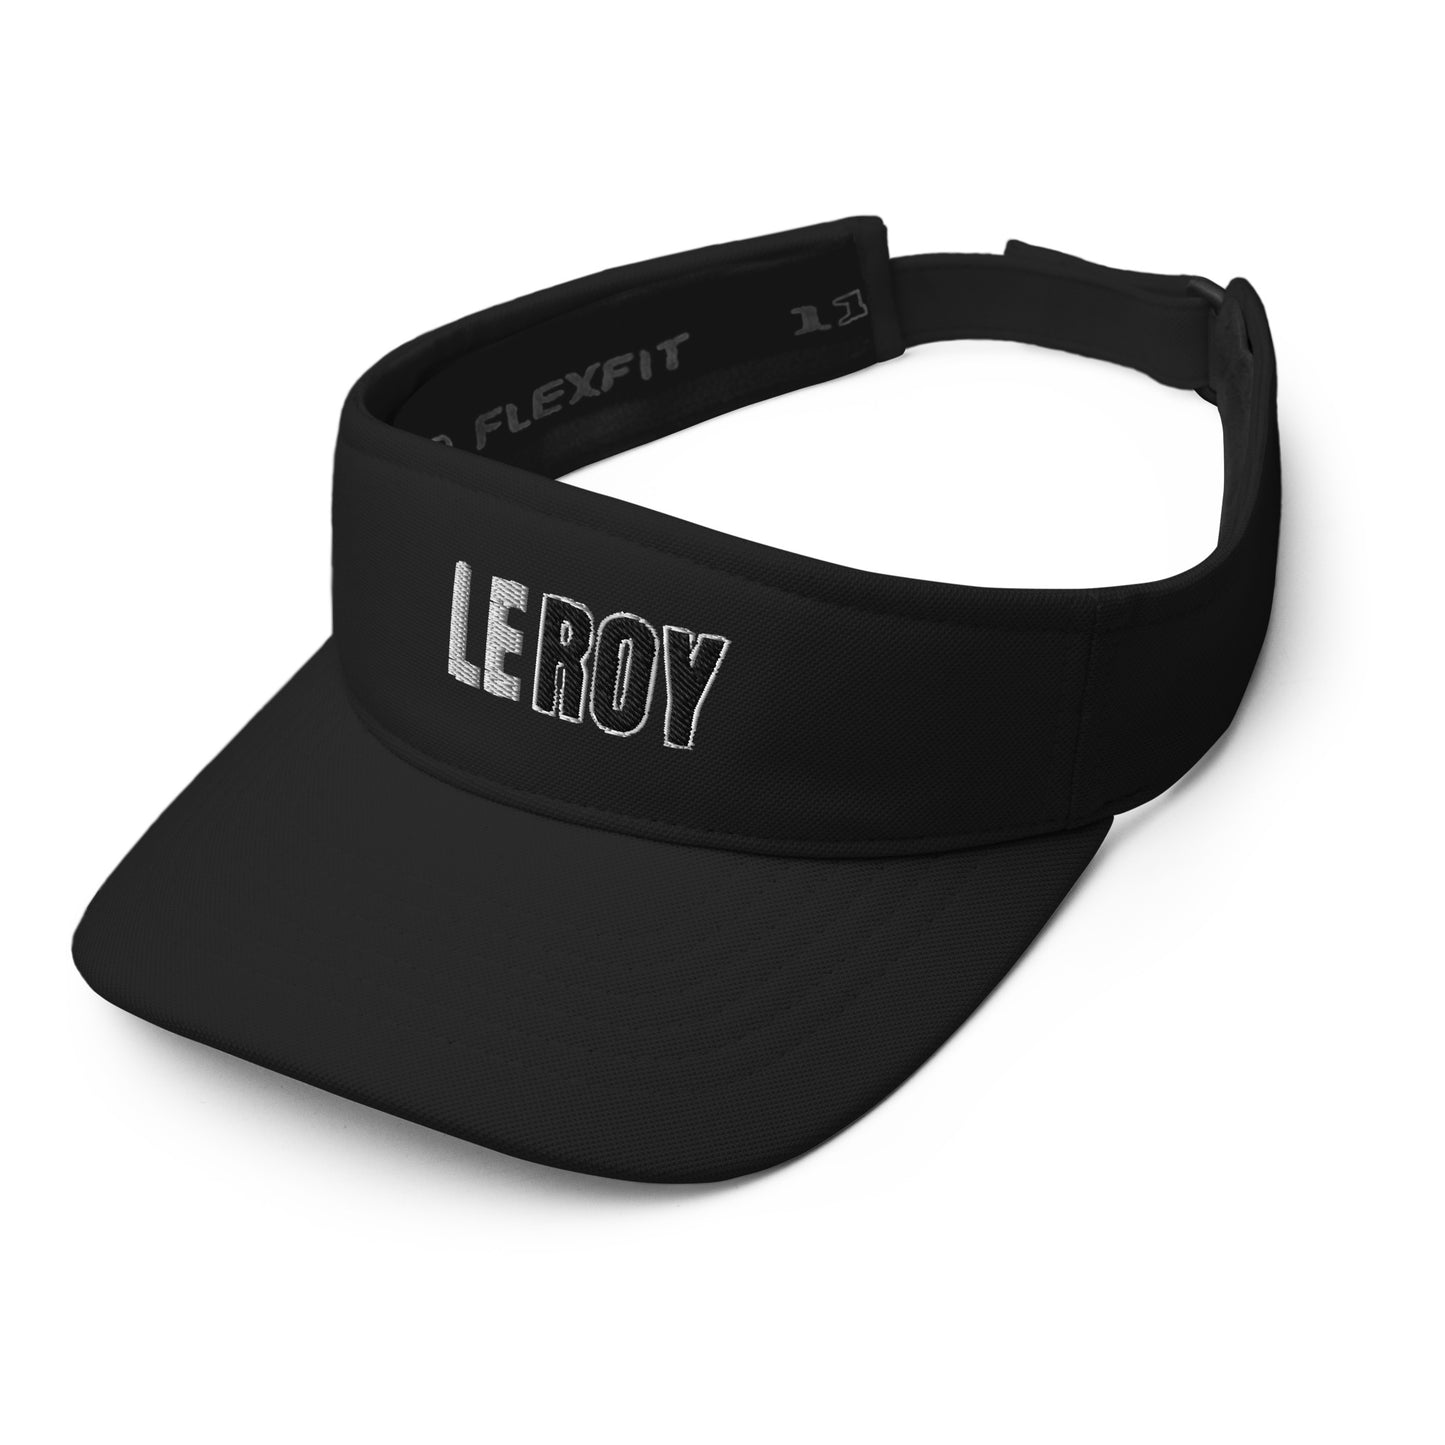 LEROY flexi-fit visor